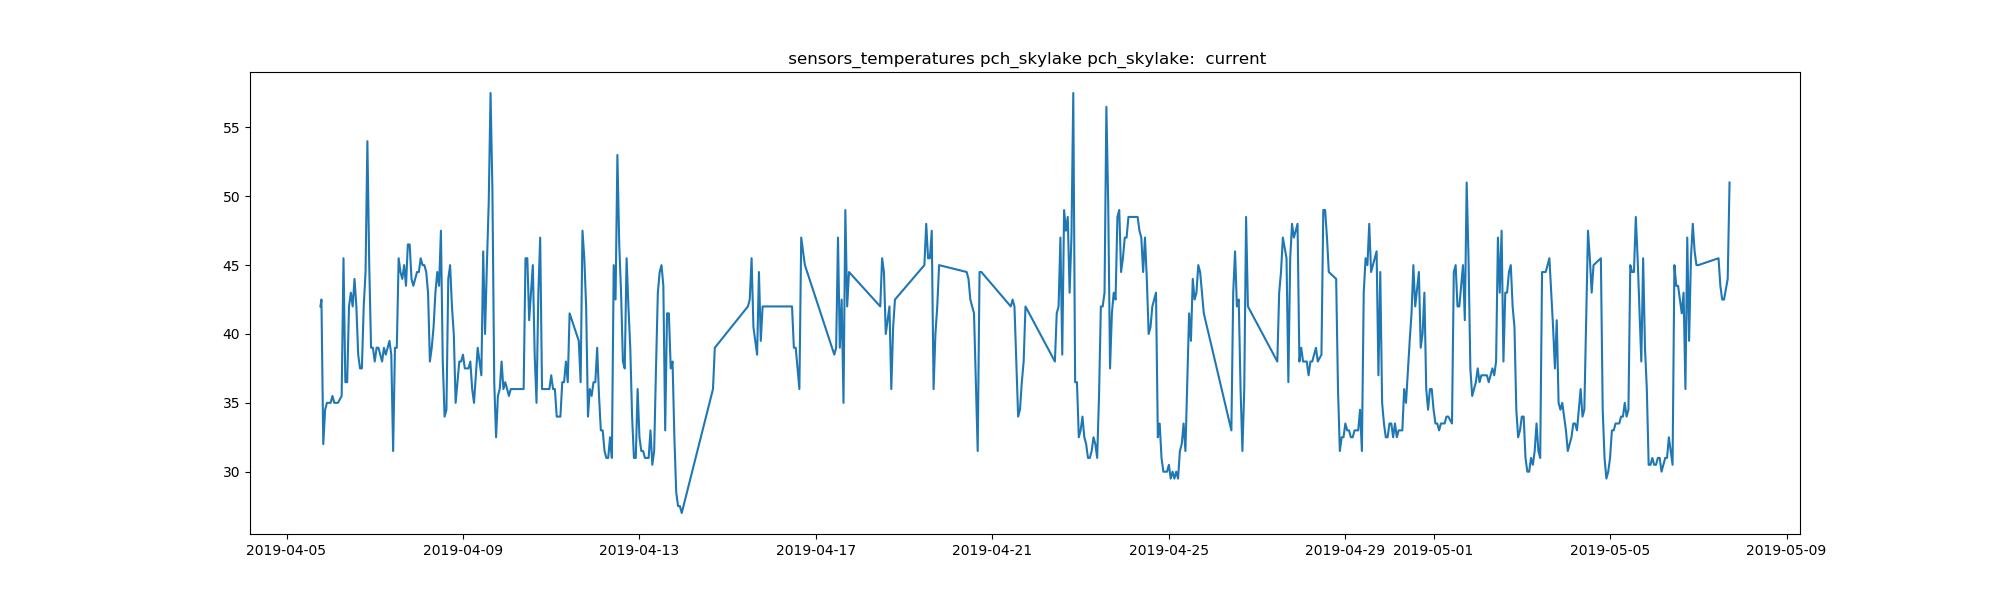 task-sensors-sensors_temperatures-acpitz-pch_skylake-pch_skylake-label-current.png